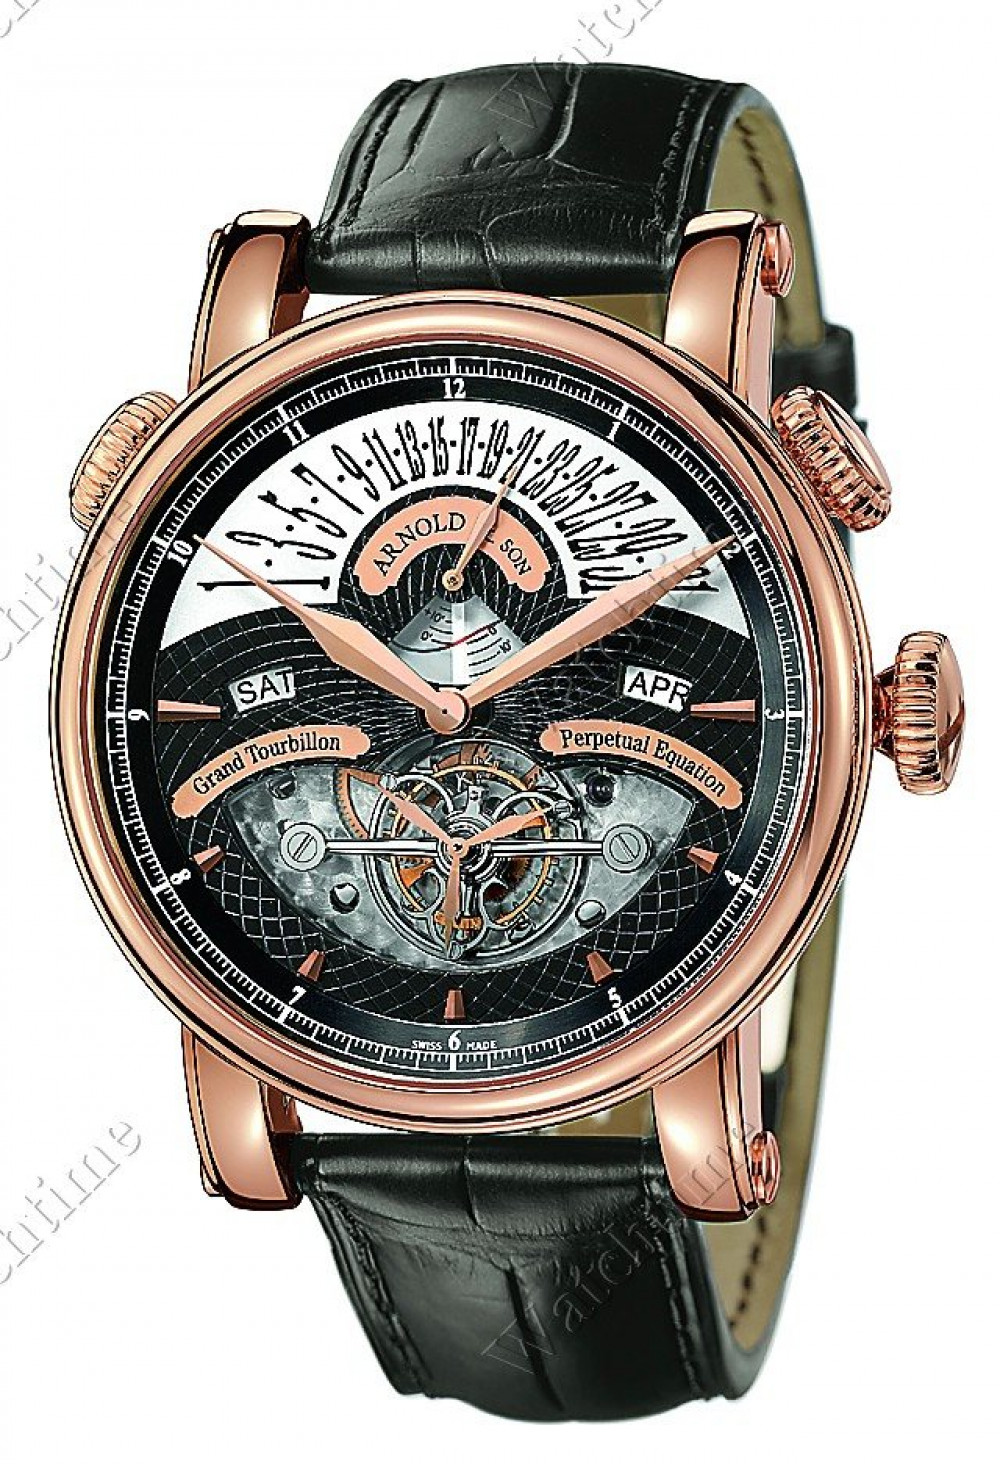 Zegarek firmy Arnold & Son, model Grand Tourbillon Perpetual